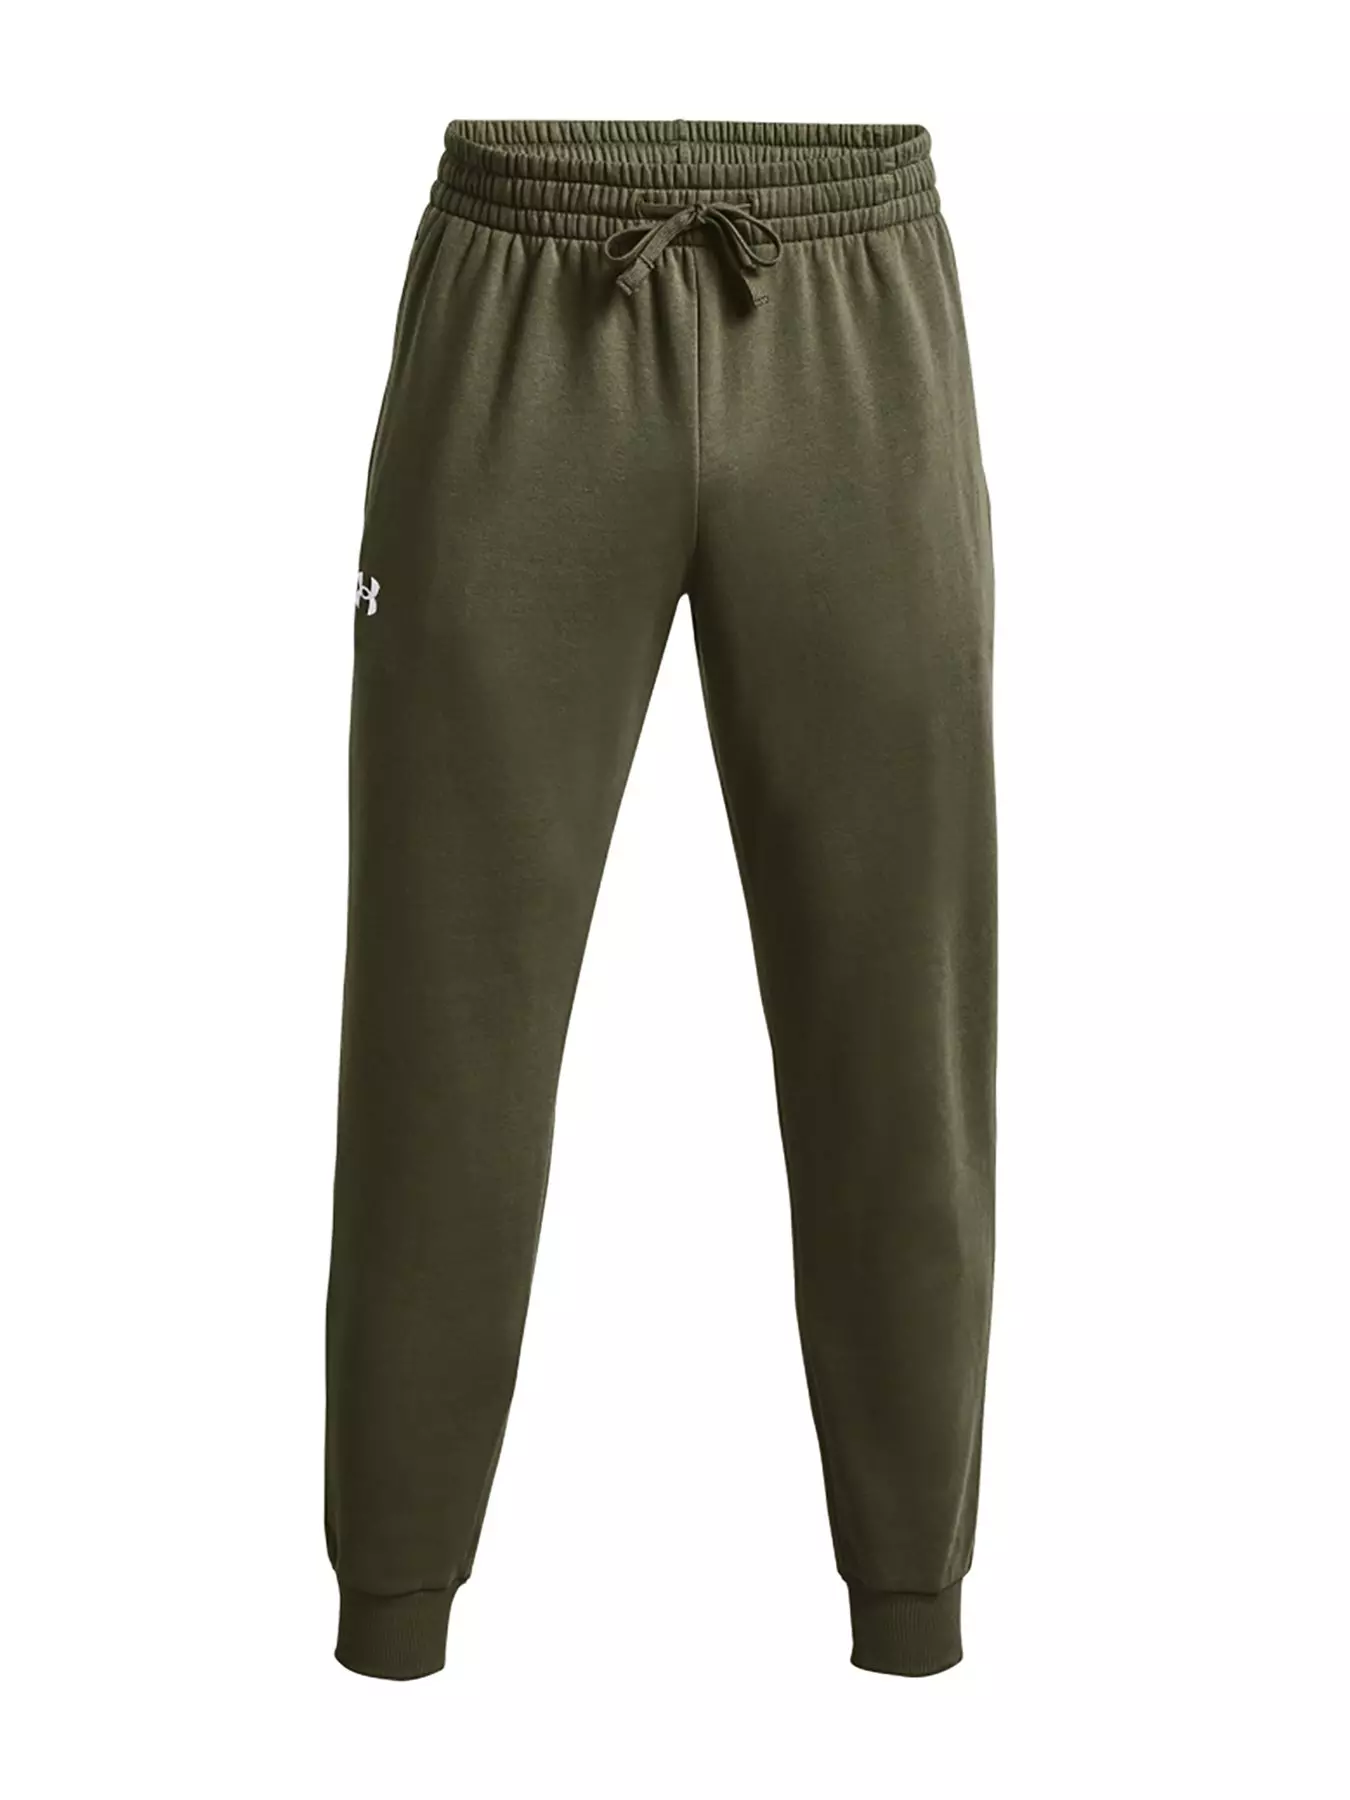 Cathery Mens Plain Grey/Black/Navy Fleece Joggers Pants Trousers